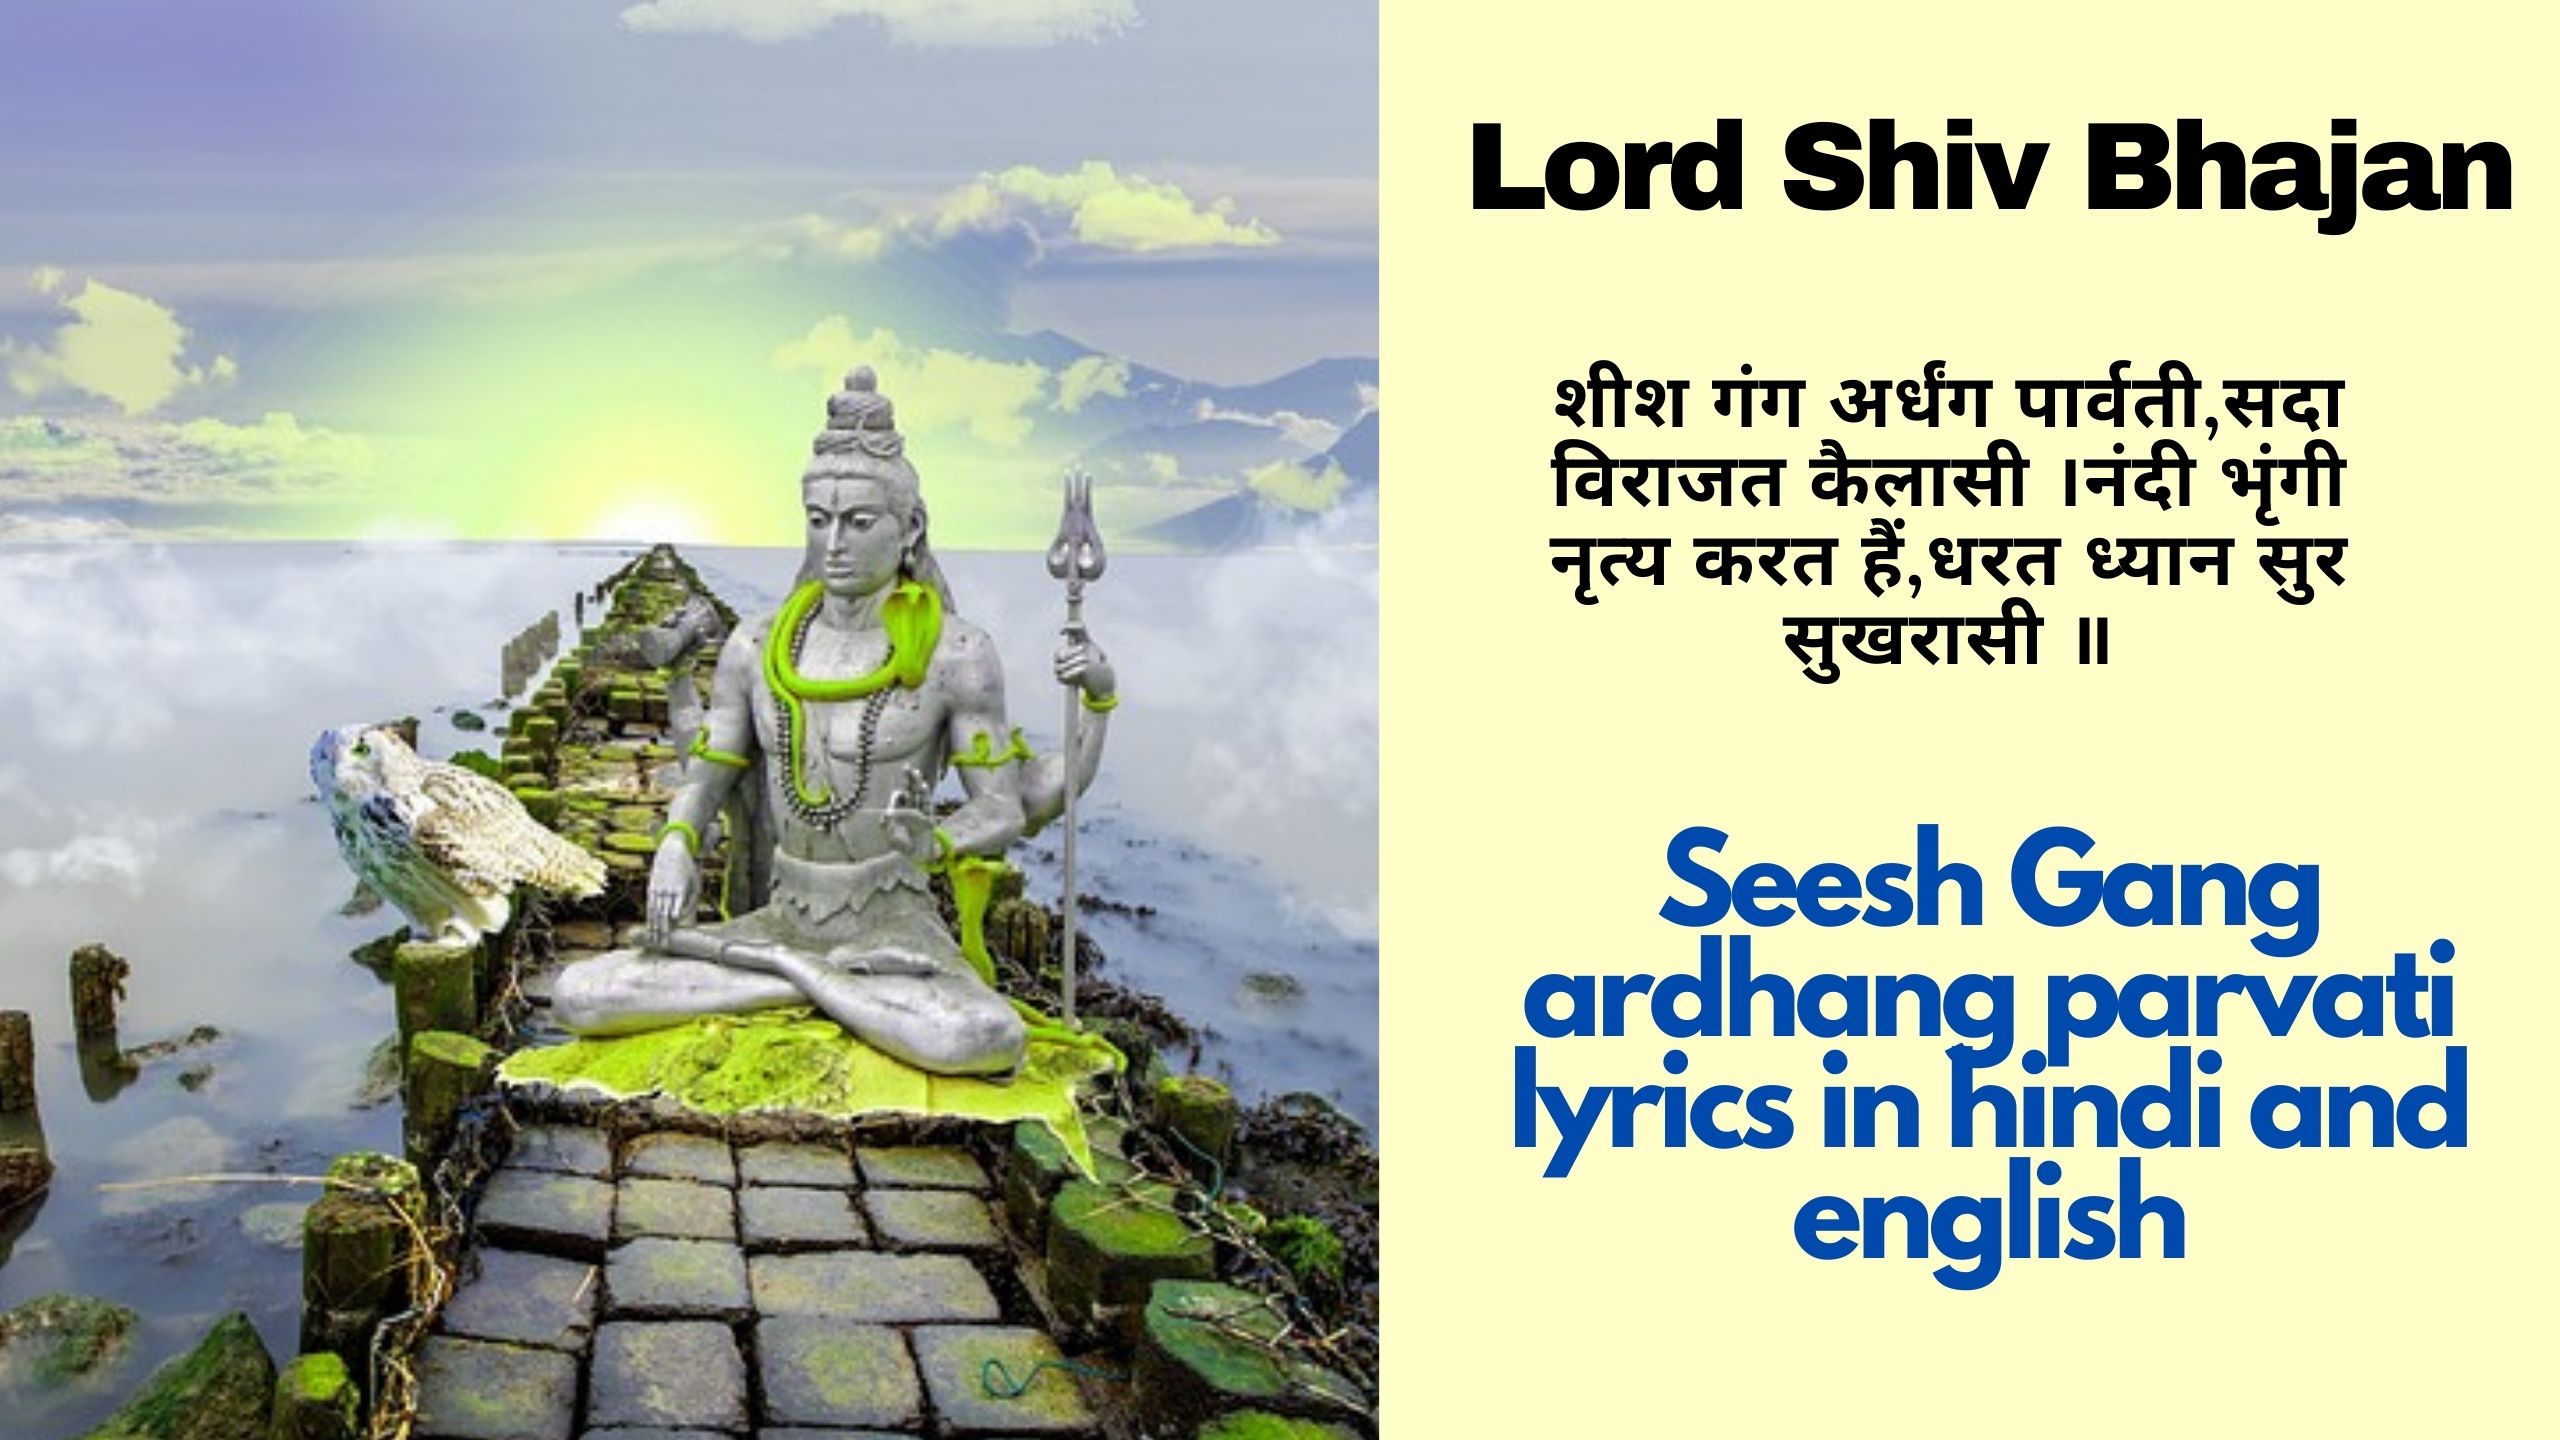 Sheesh Gang ardhang parvati lyrics in hindi and english – Lord Shiv Bhajan